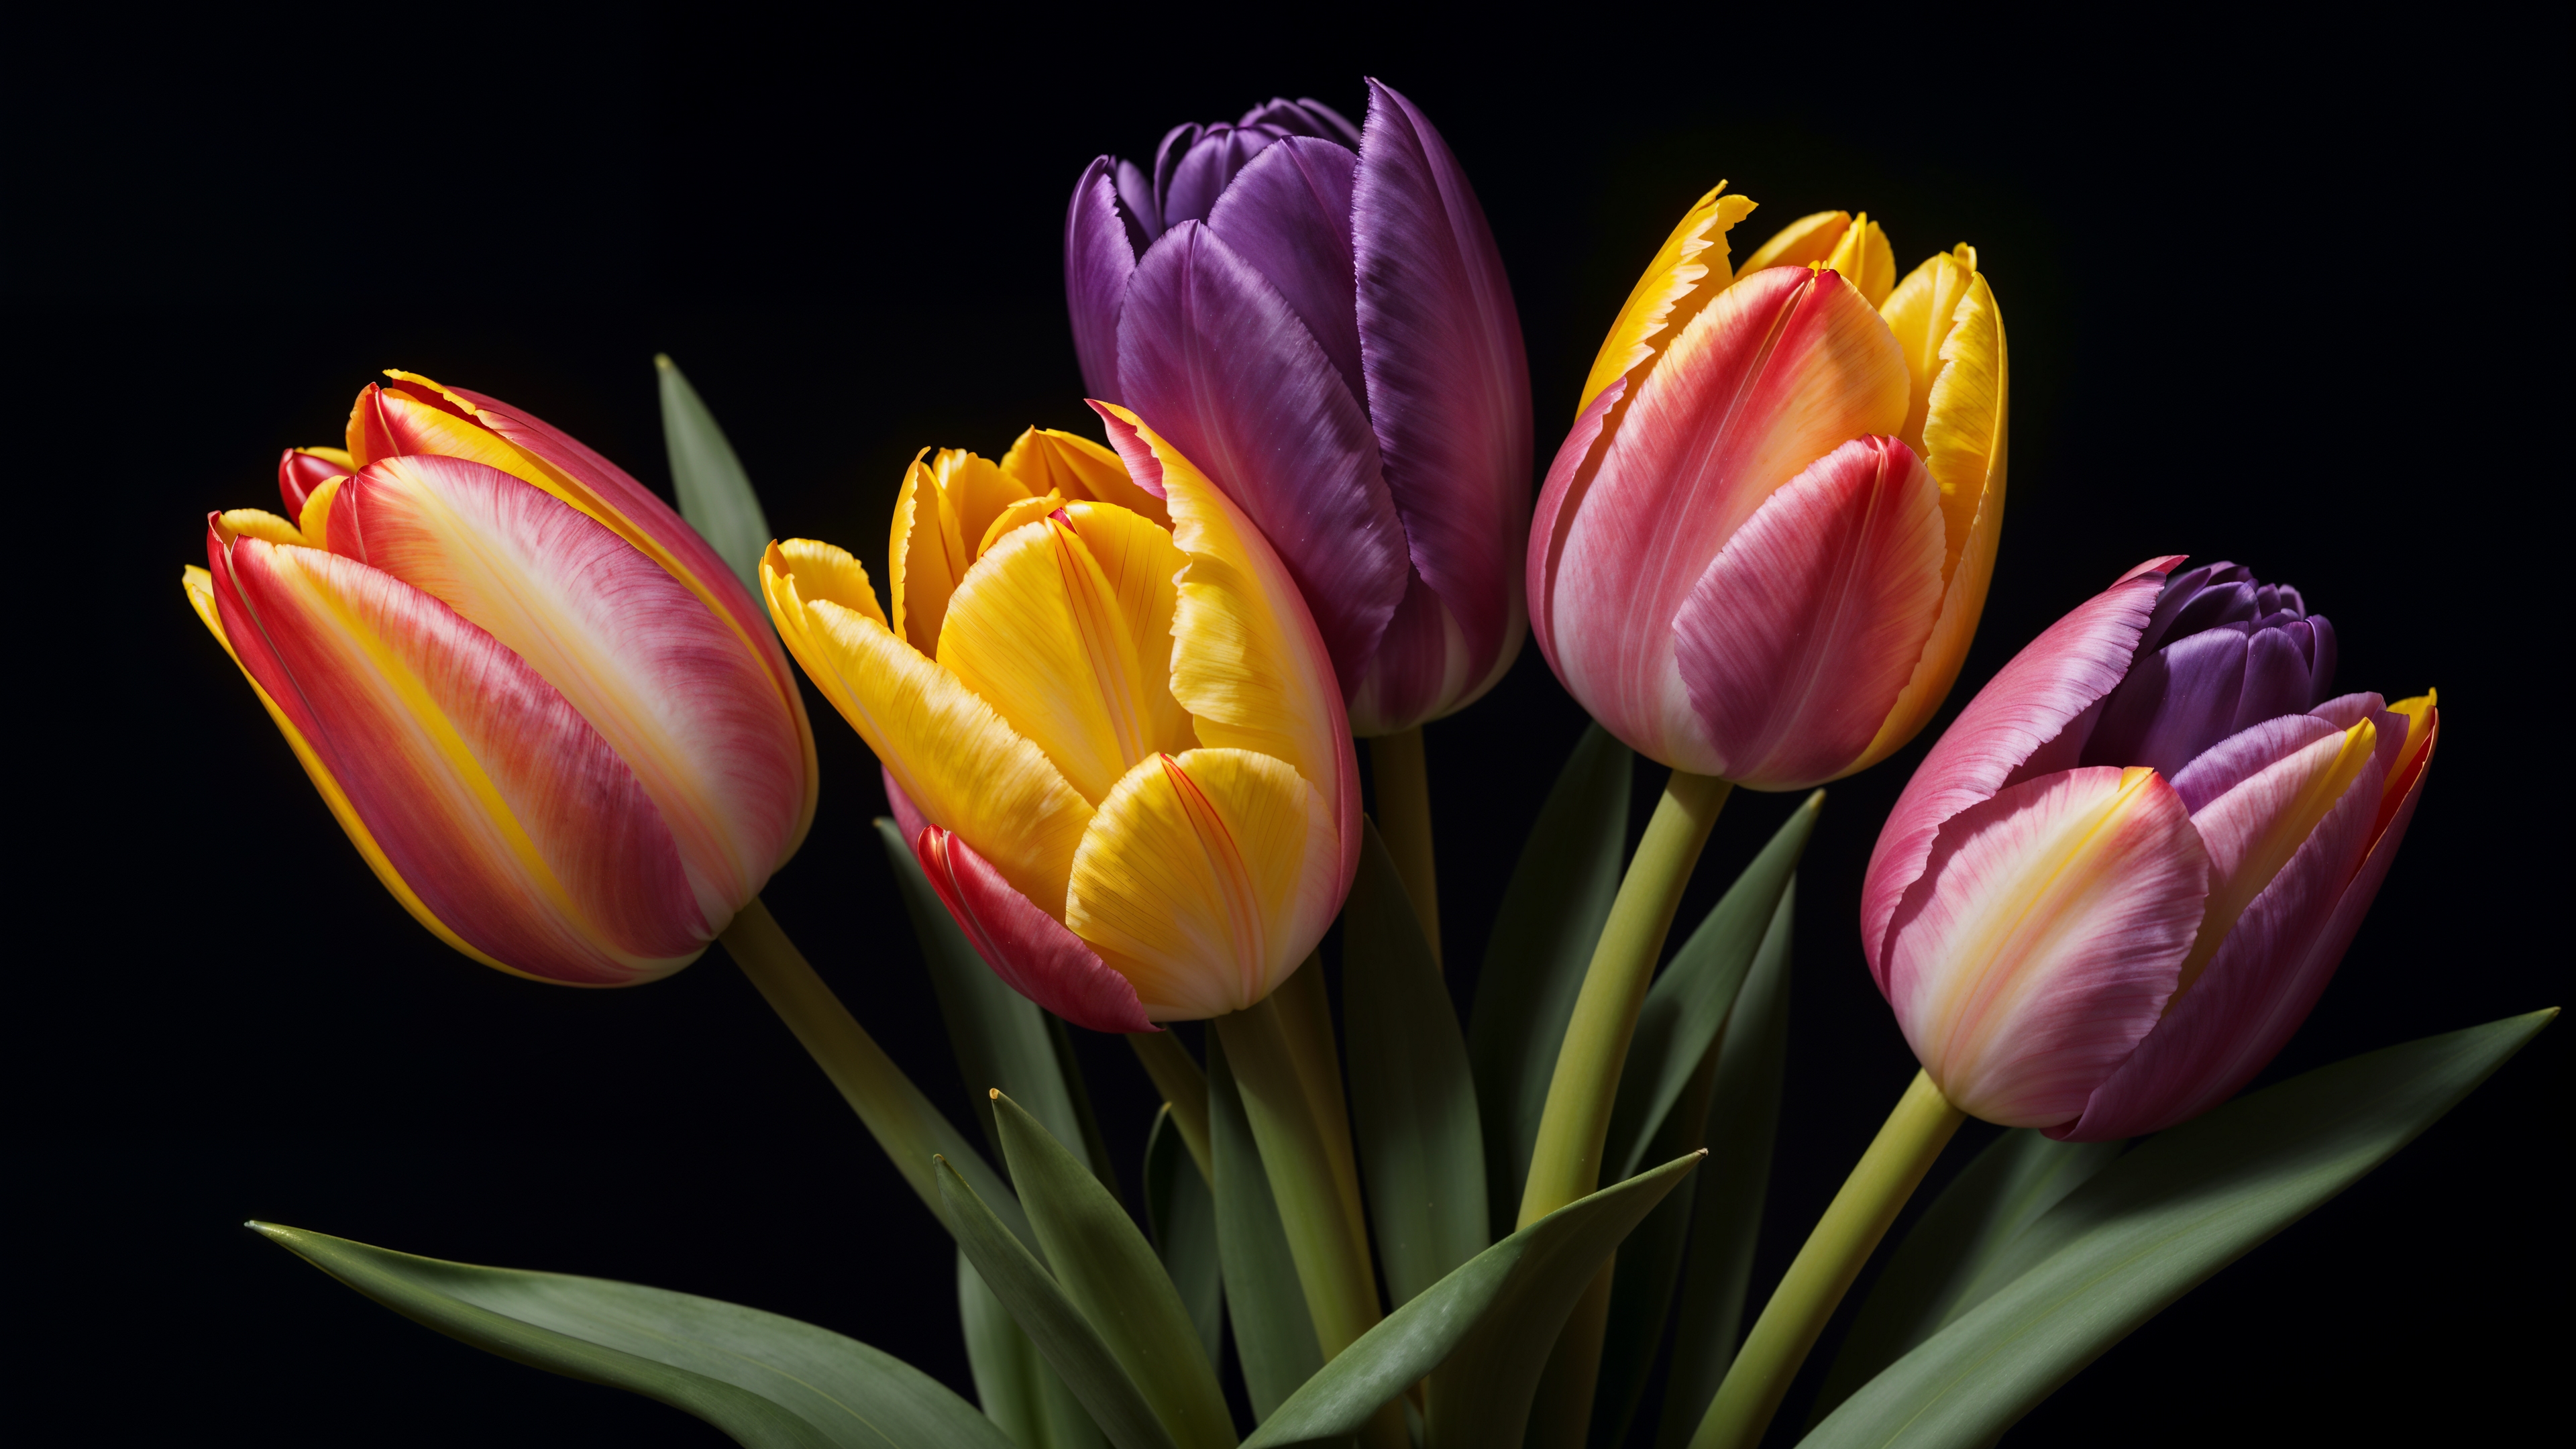 General 3840x2160 digital art flowers tulips simple background black background closeup